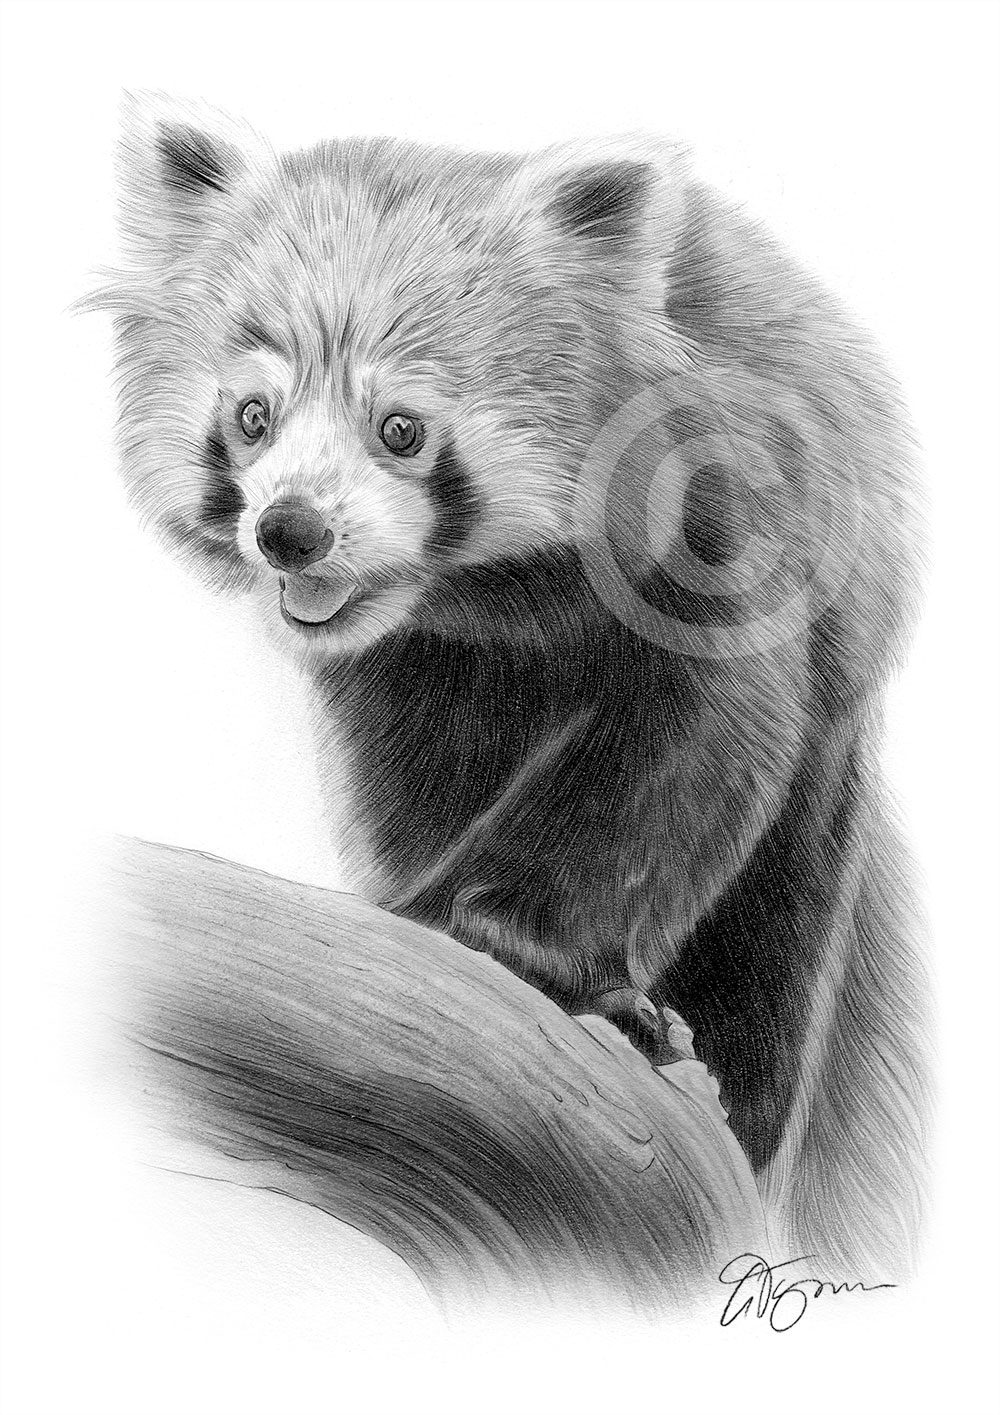 Pencil drawing of a red panda by UK artist Gary Tymon